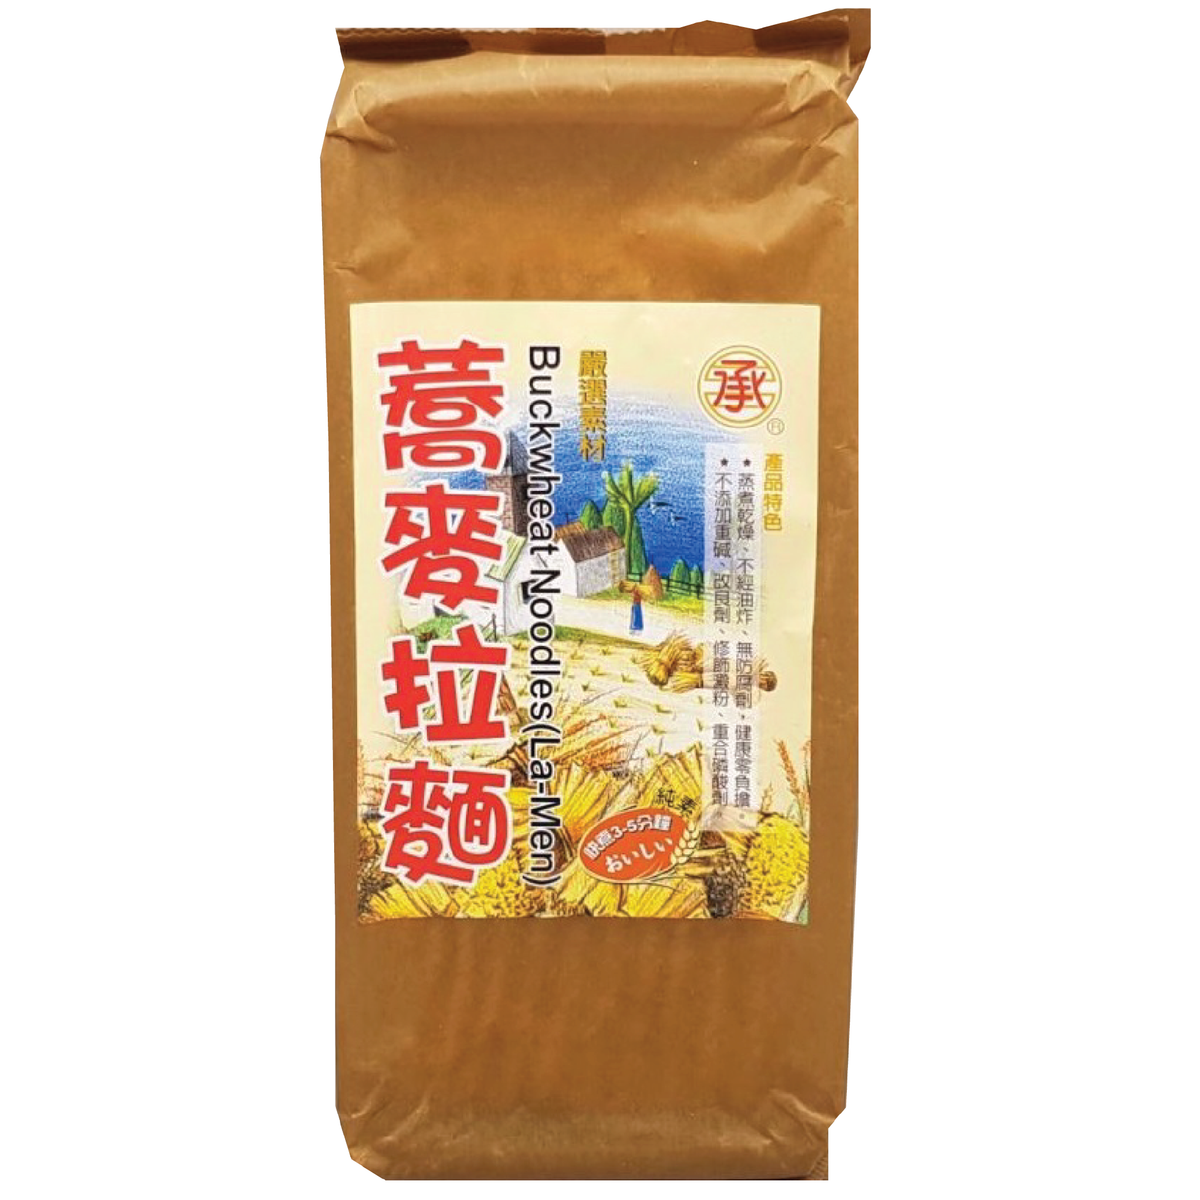 Taiwan Buckwheat
Noodles (La-Men) (280GM)